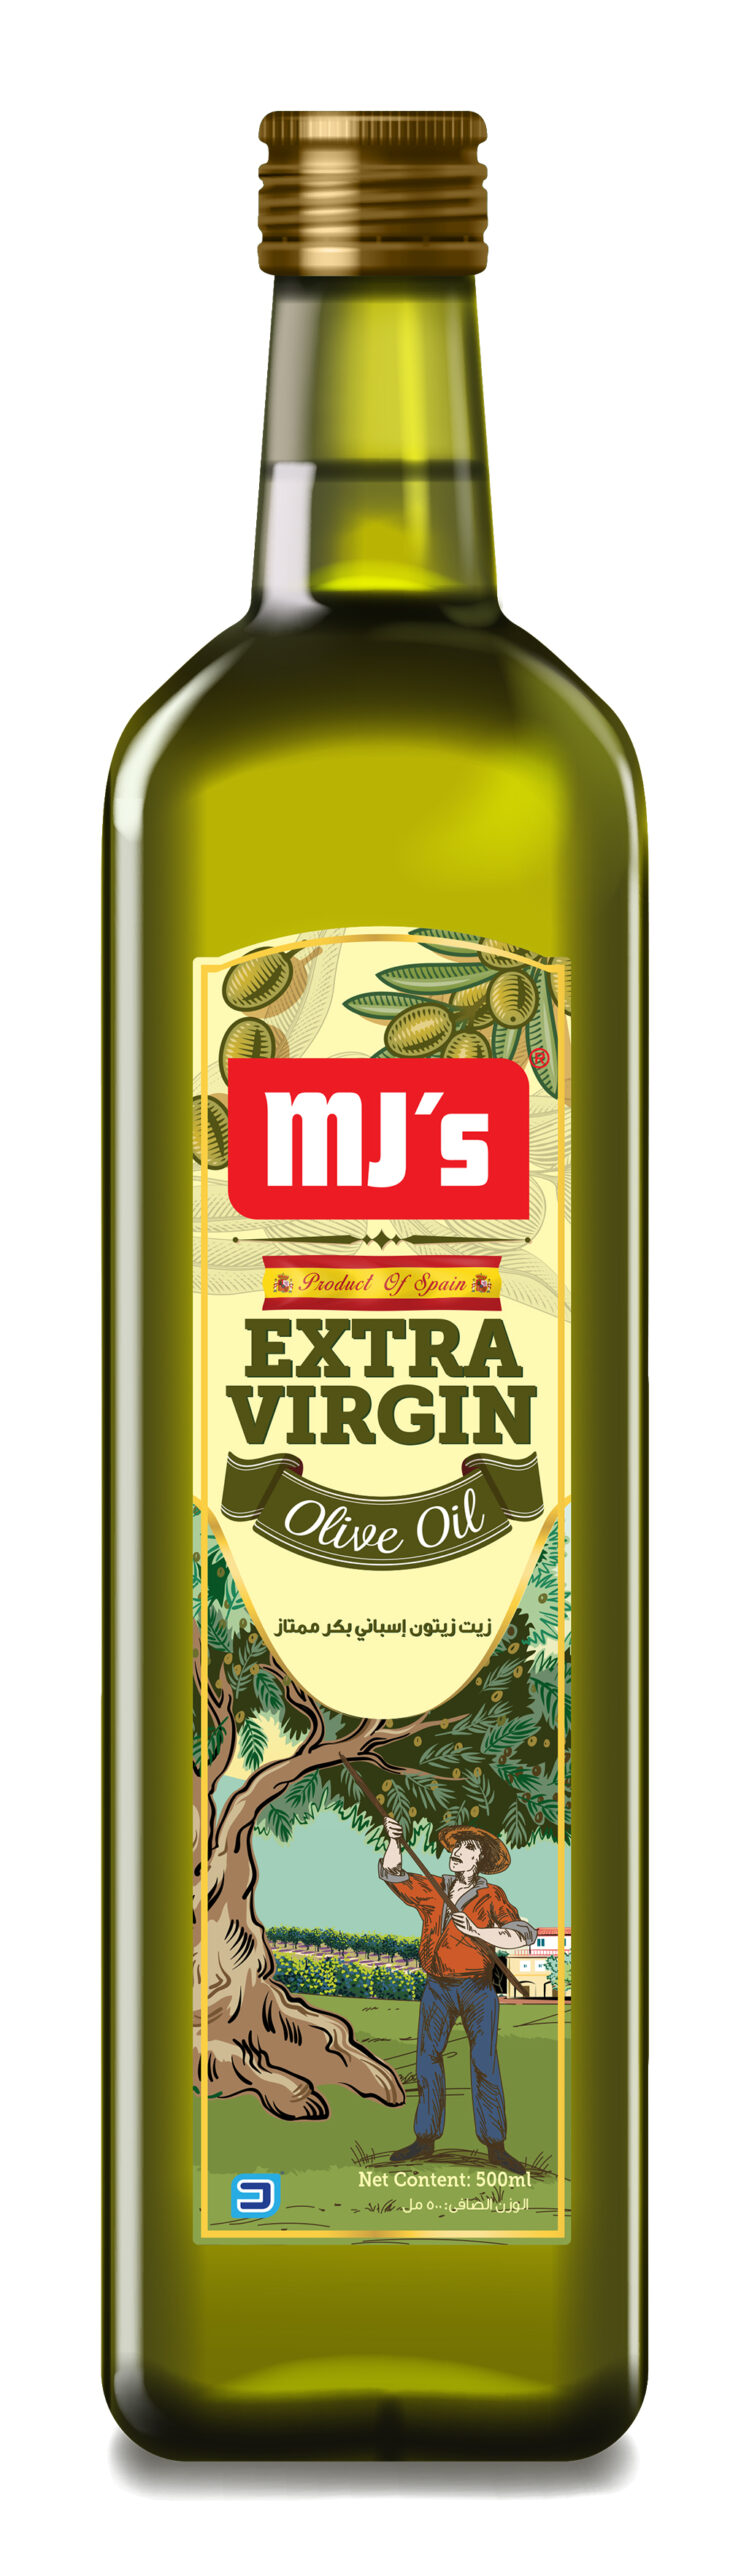 extra virgin Olive Oil - 750ml